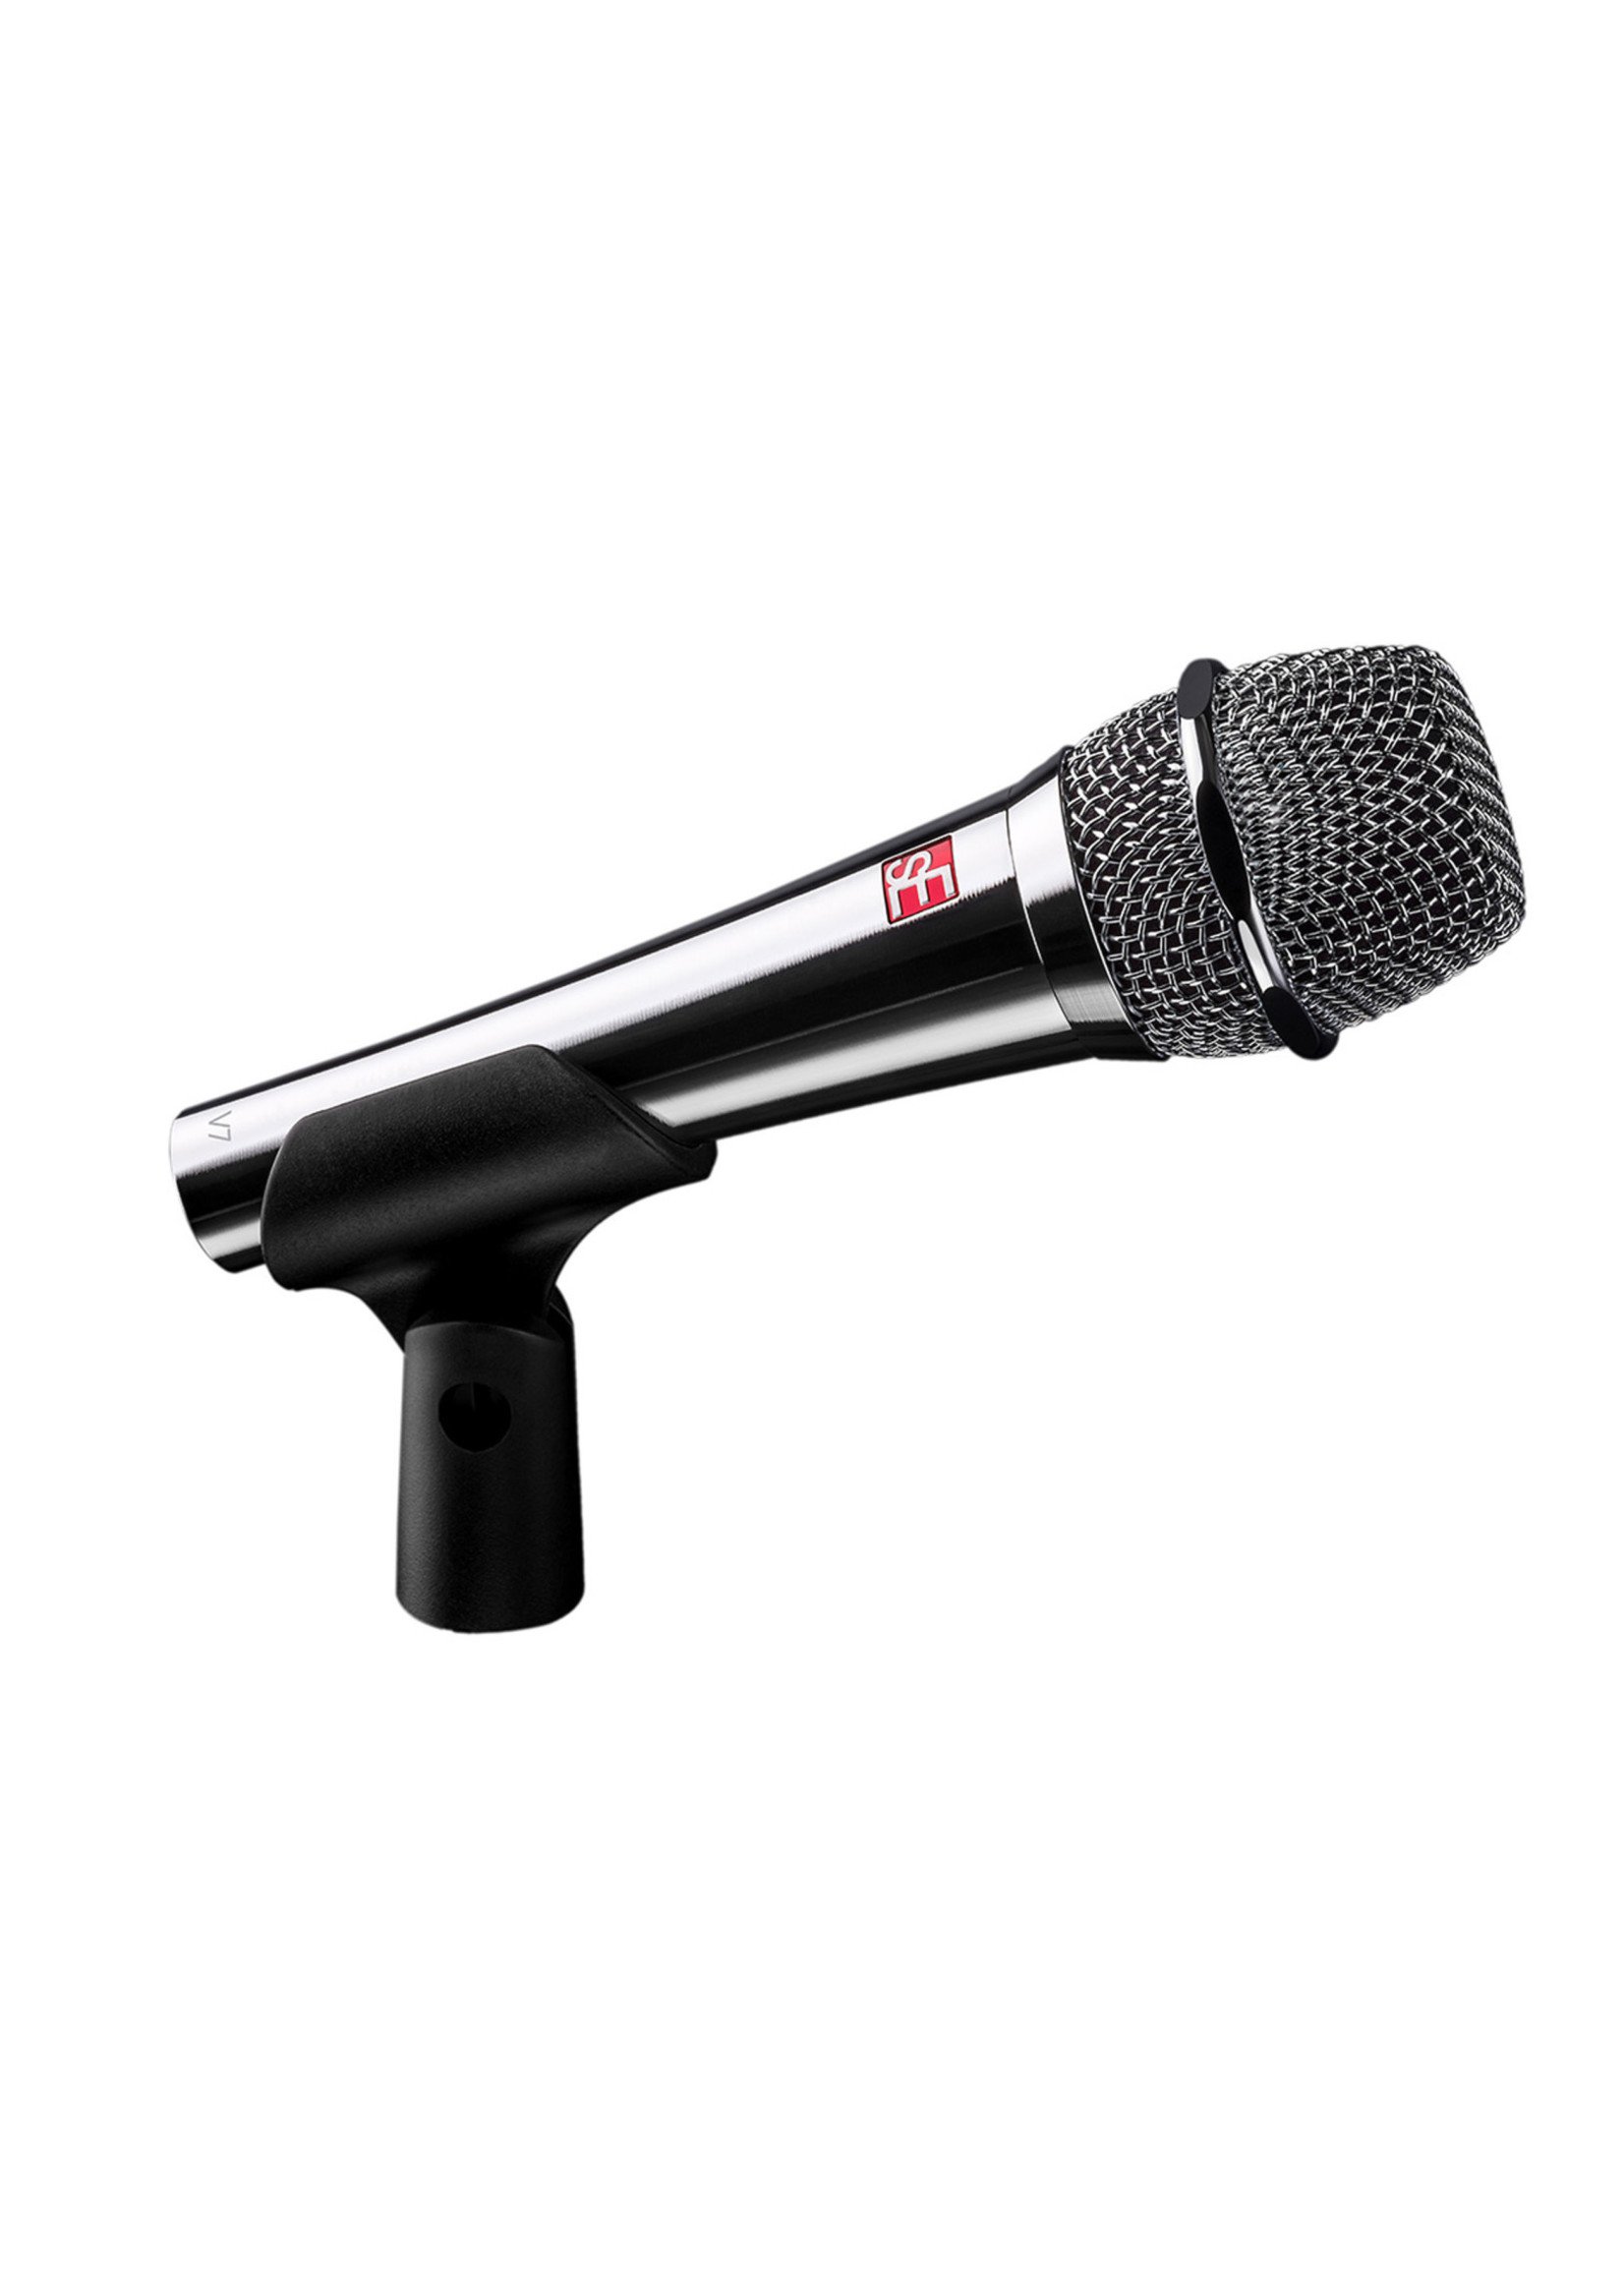 sE sE V7 Chrome Dynamic Microphone